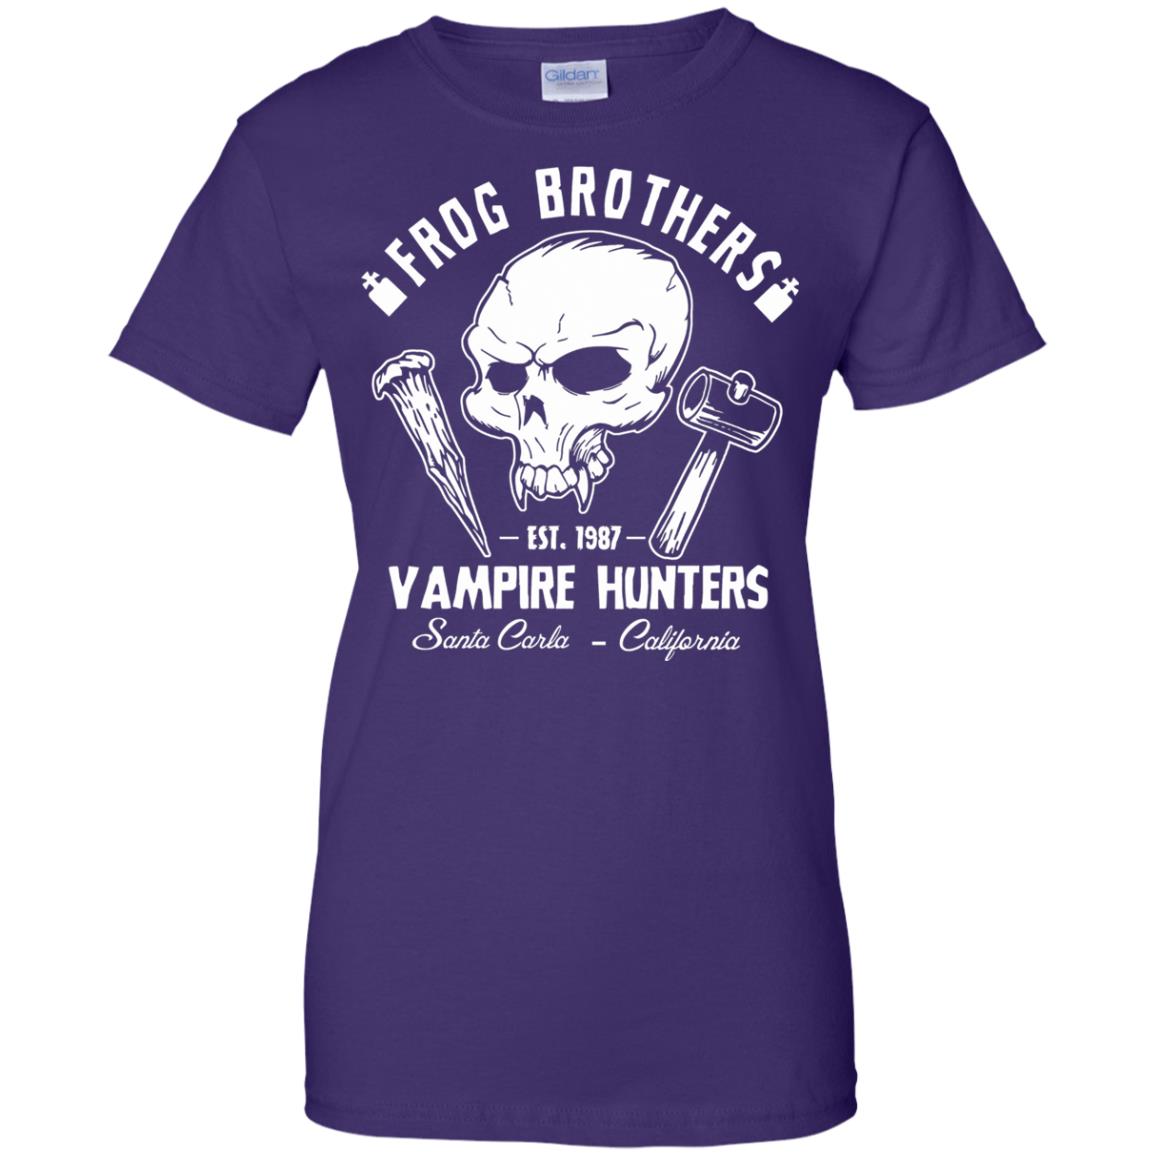 frog brothers womens t shirt - lady t shirt - purple